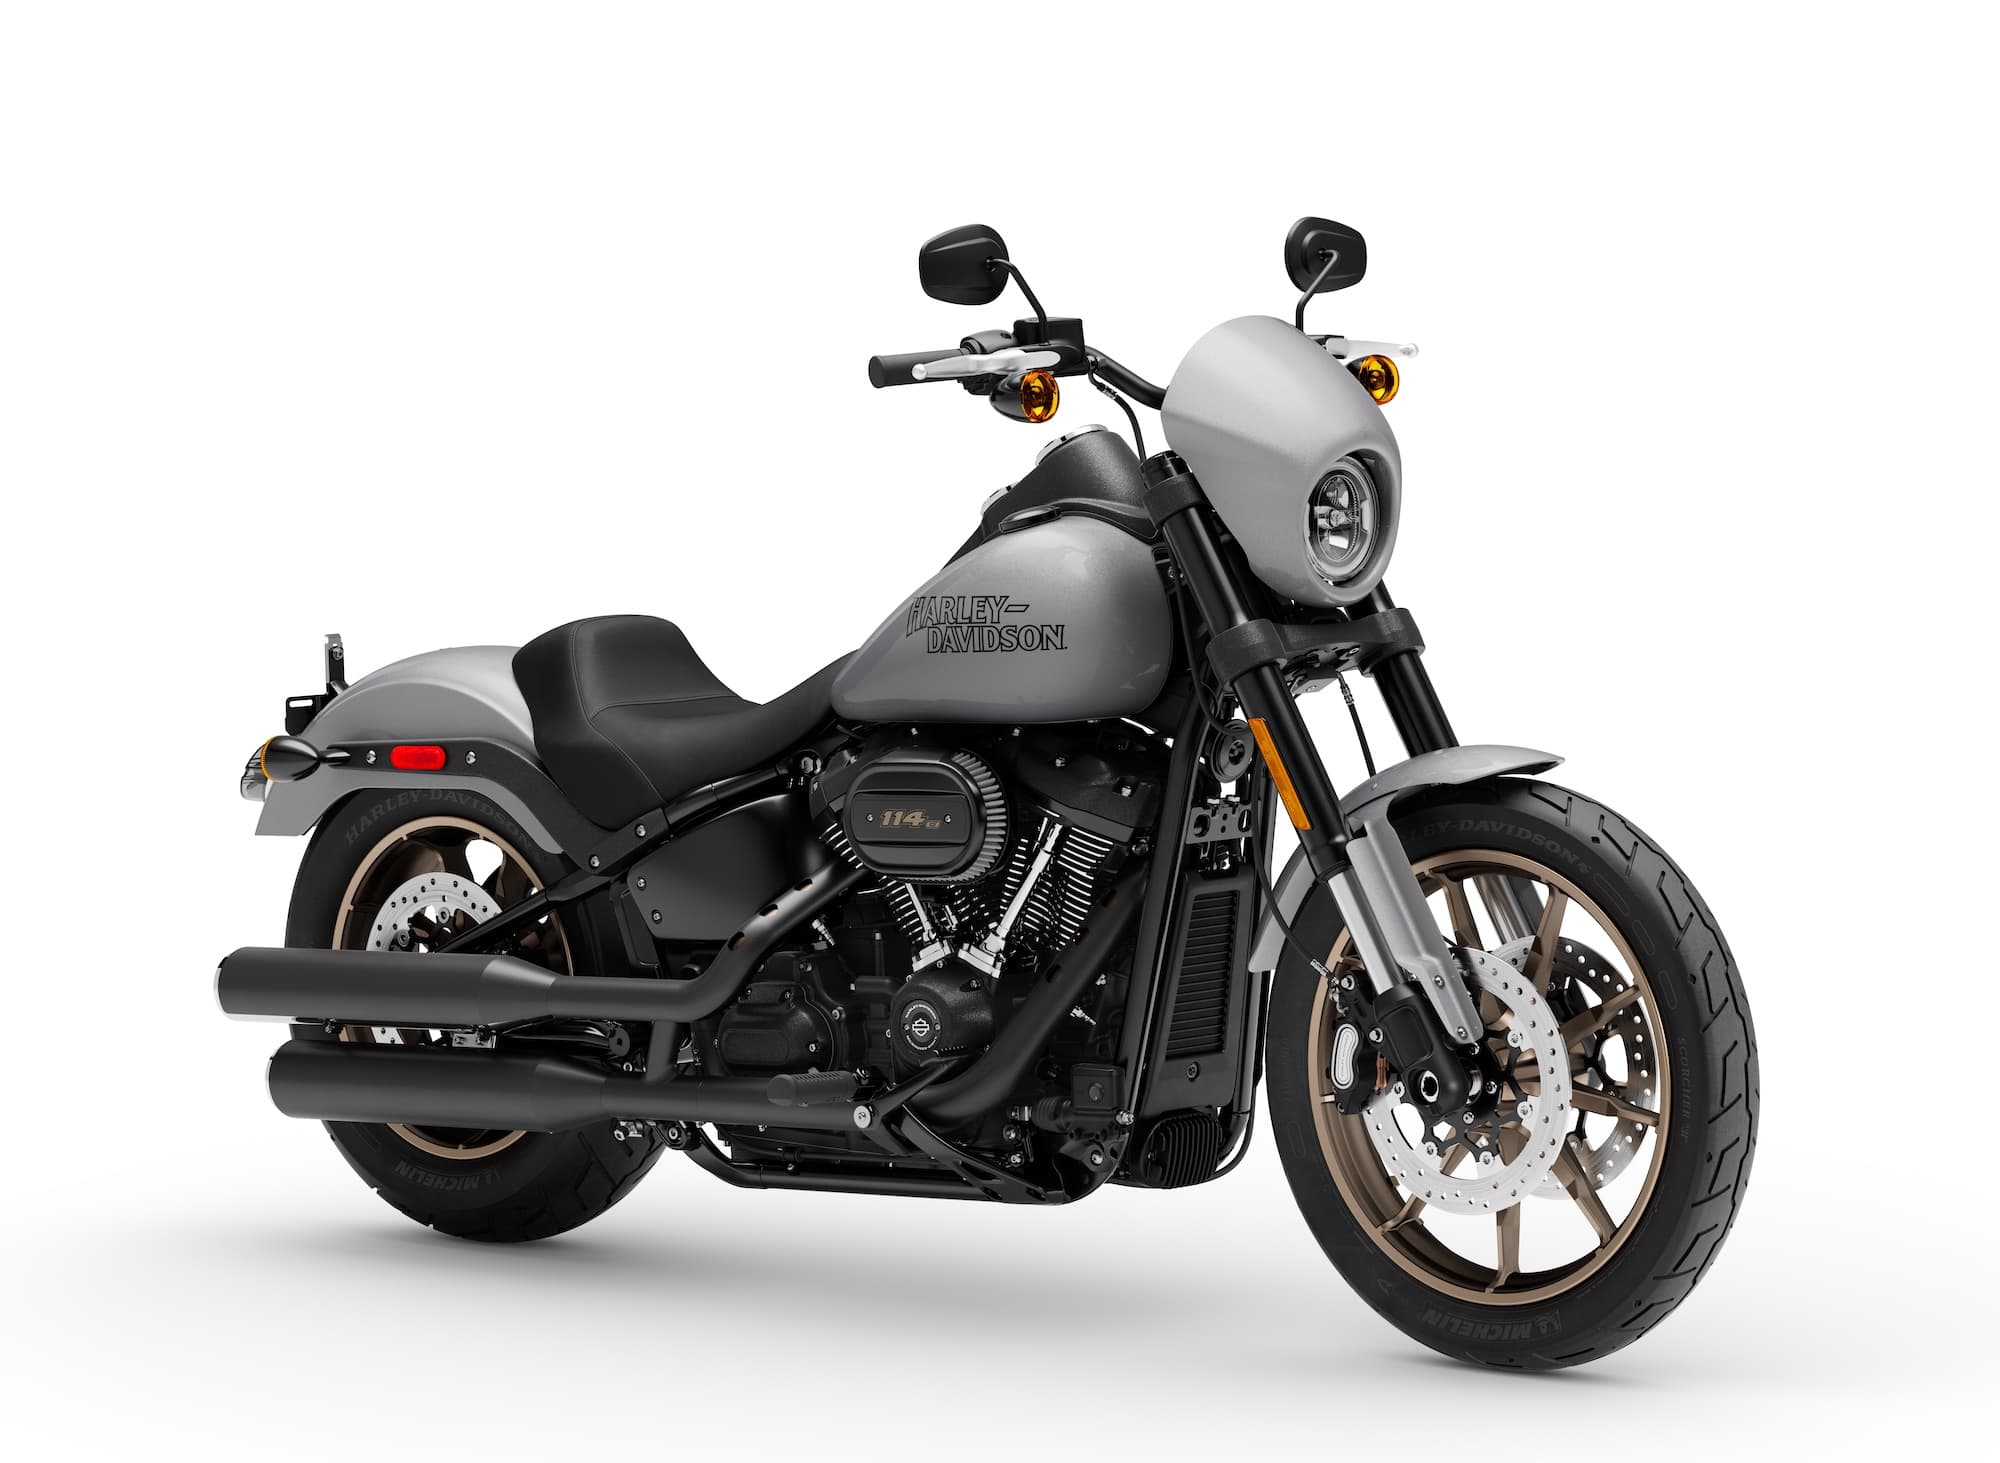 2020 Harley-Davidson Low Rider S 114 FXLRS Front 3-4